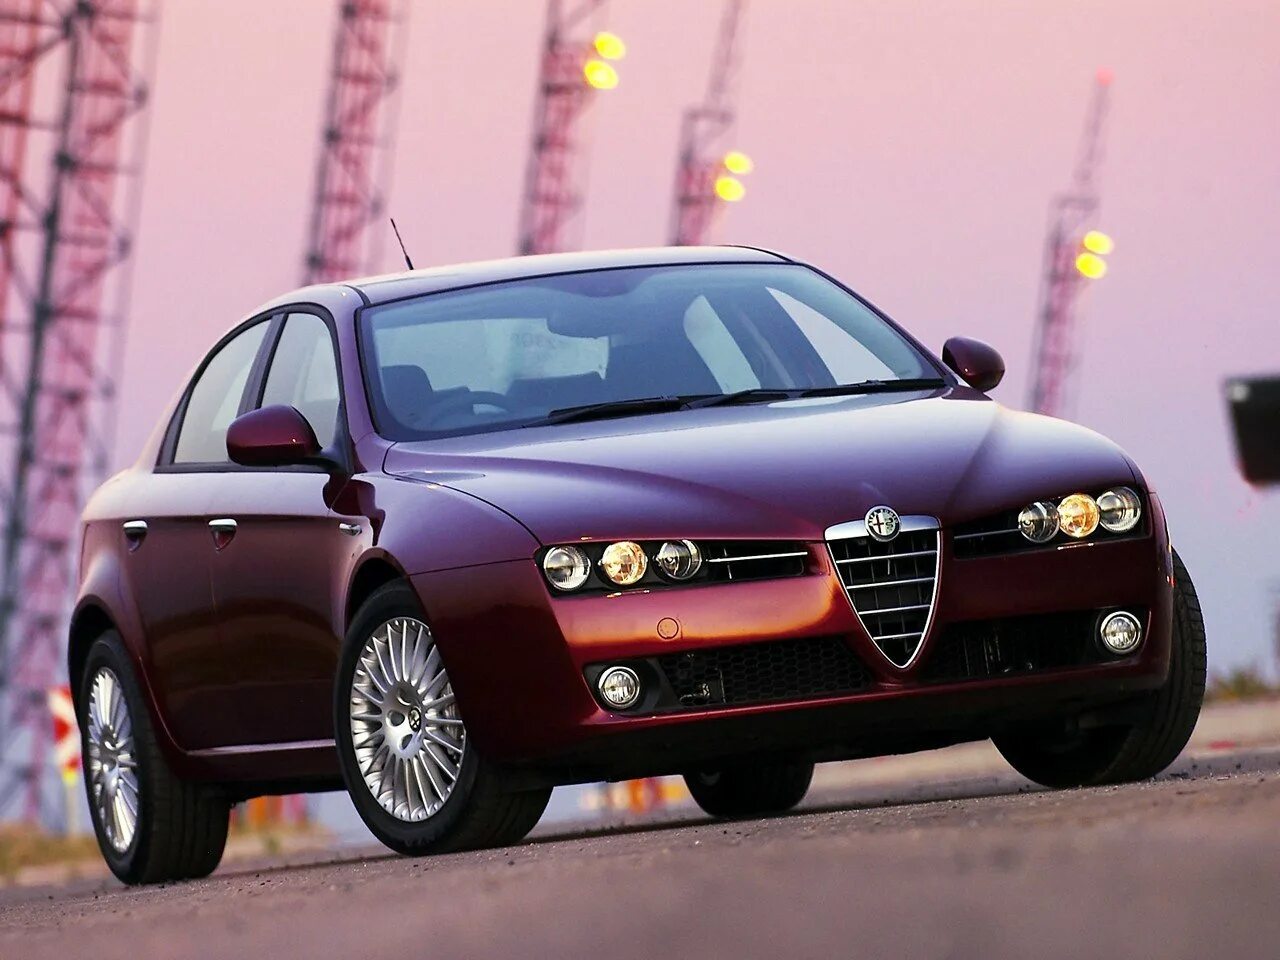 Альфа ромео бу. Alfa Romeo. Alfa Romeo 159 3.2. Автомобиль Альфа Ромео 159. Alfa Romeo 159, 3.2 JTS.